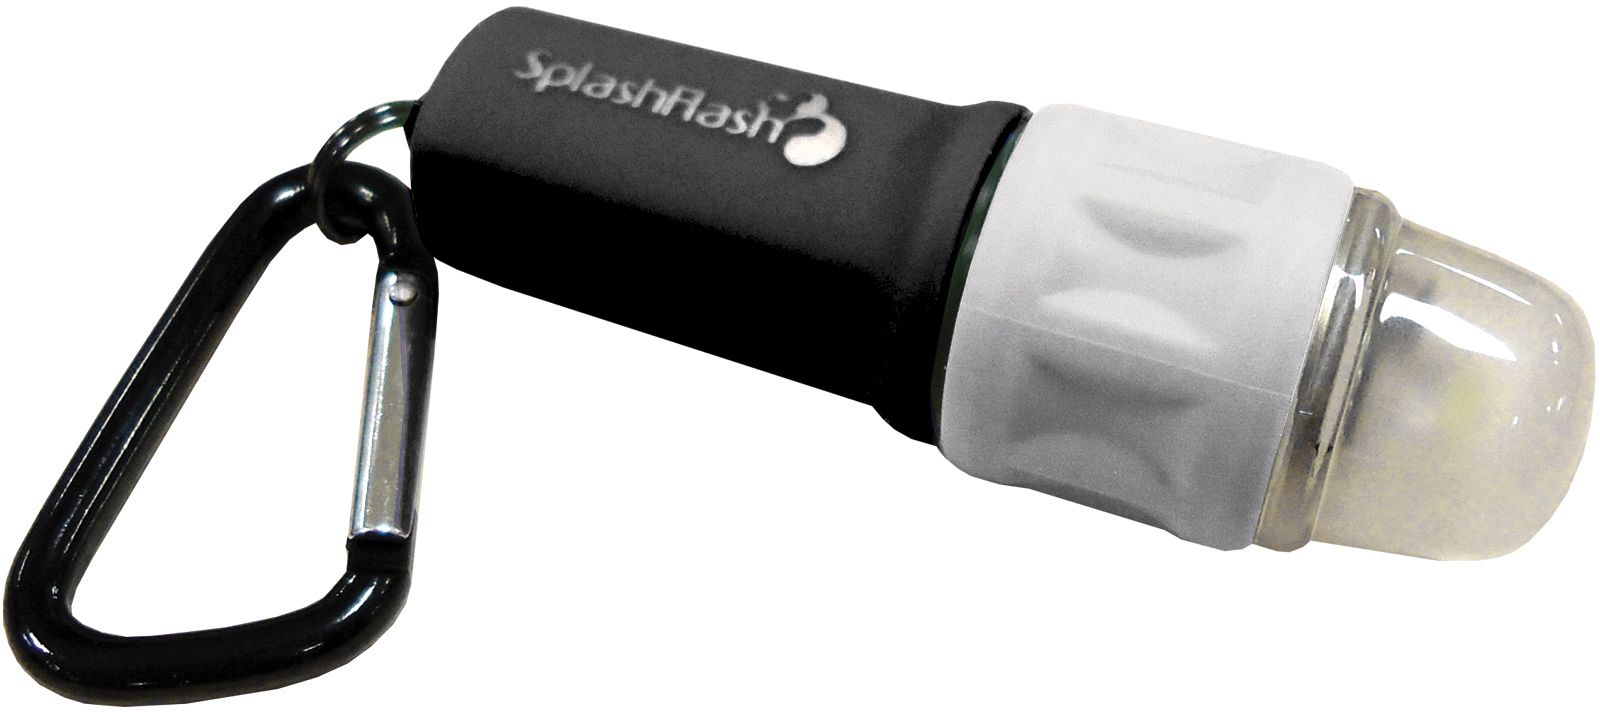 SplashFlash LED Flashlight Bug Out Bag Survival Locator Gear Equipment Kit 